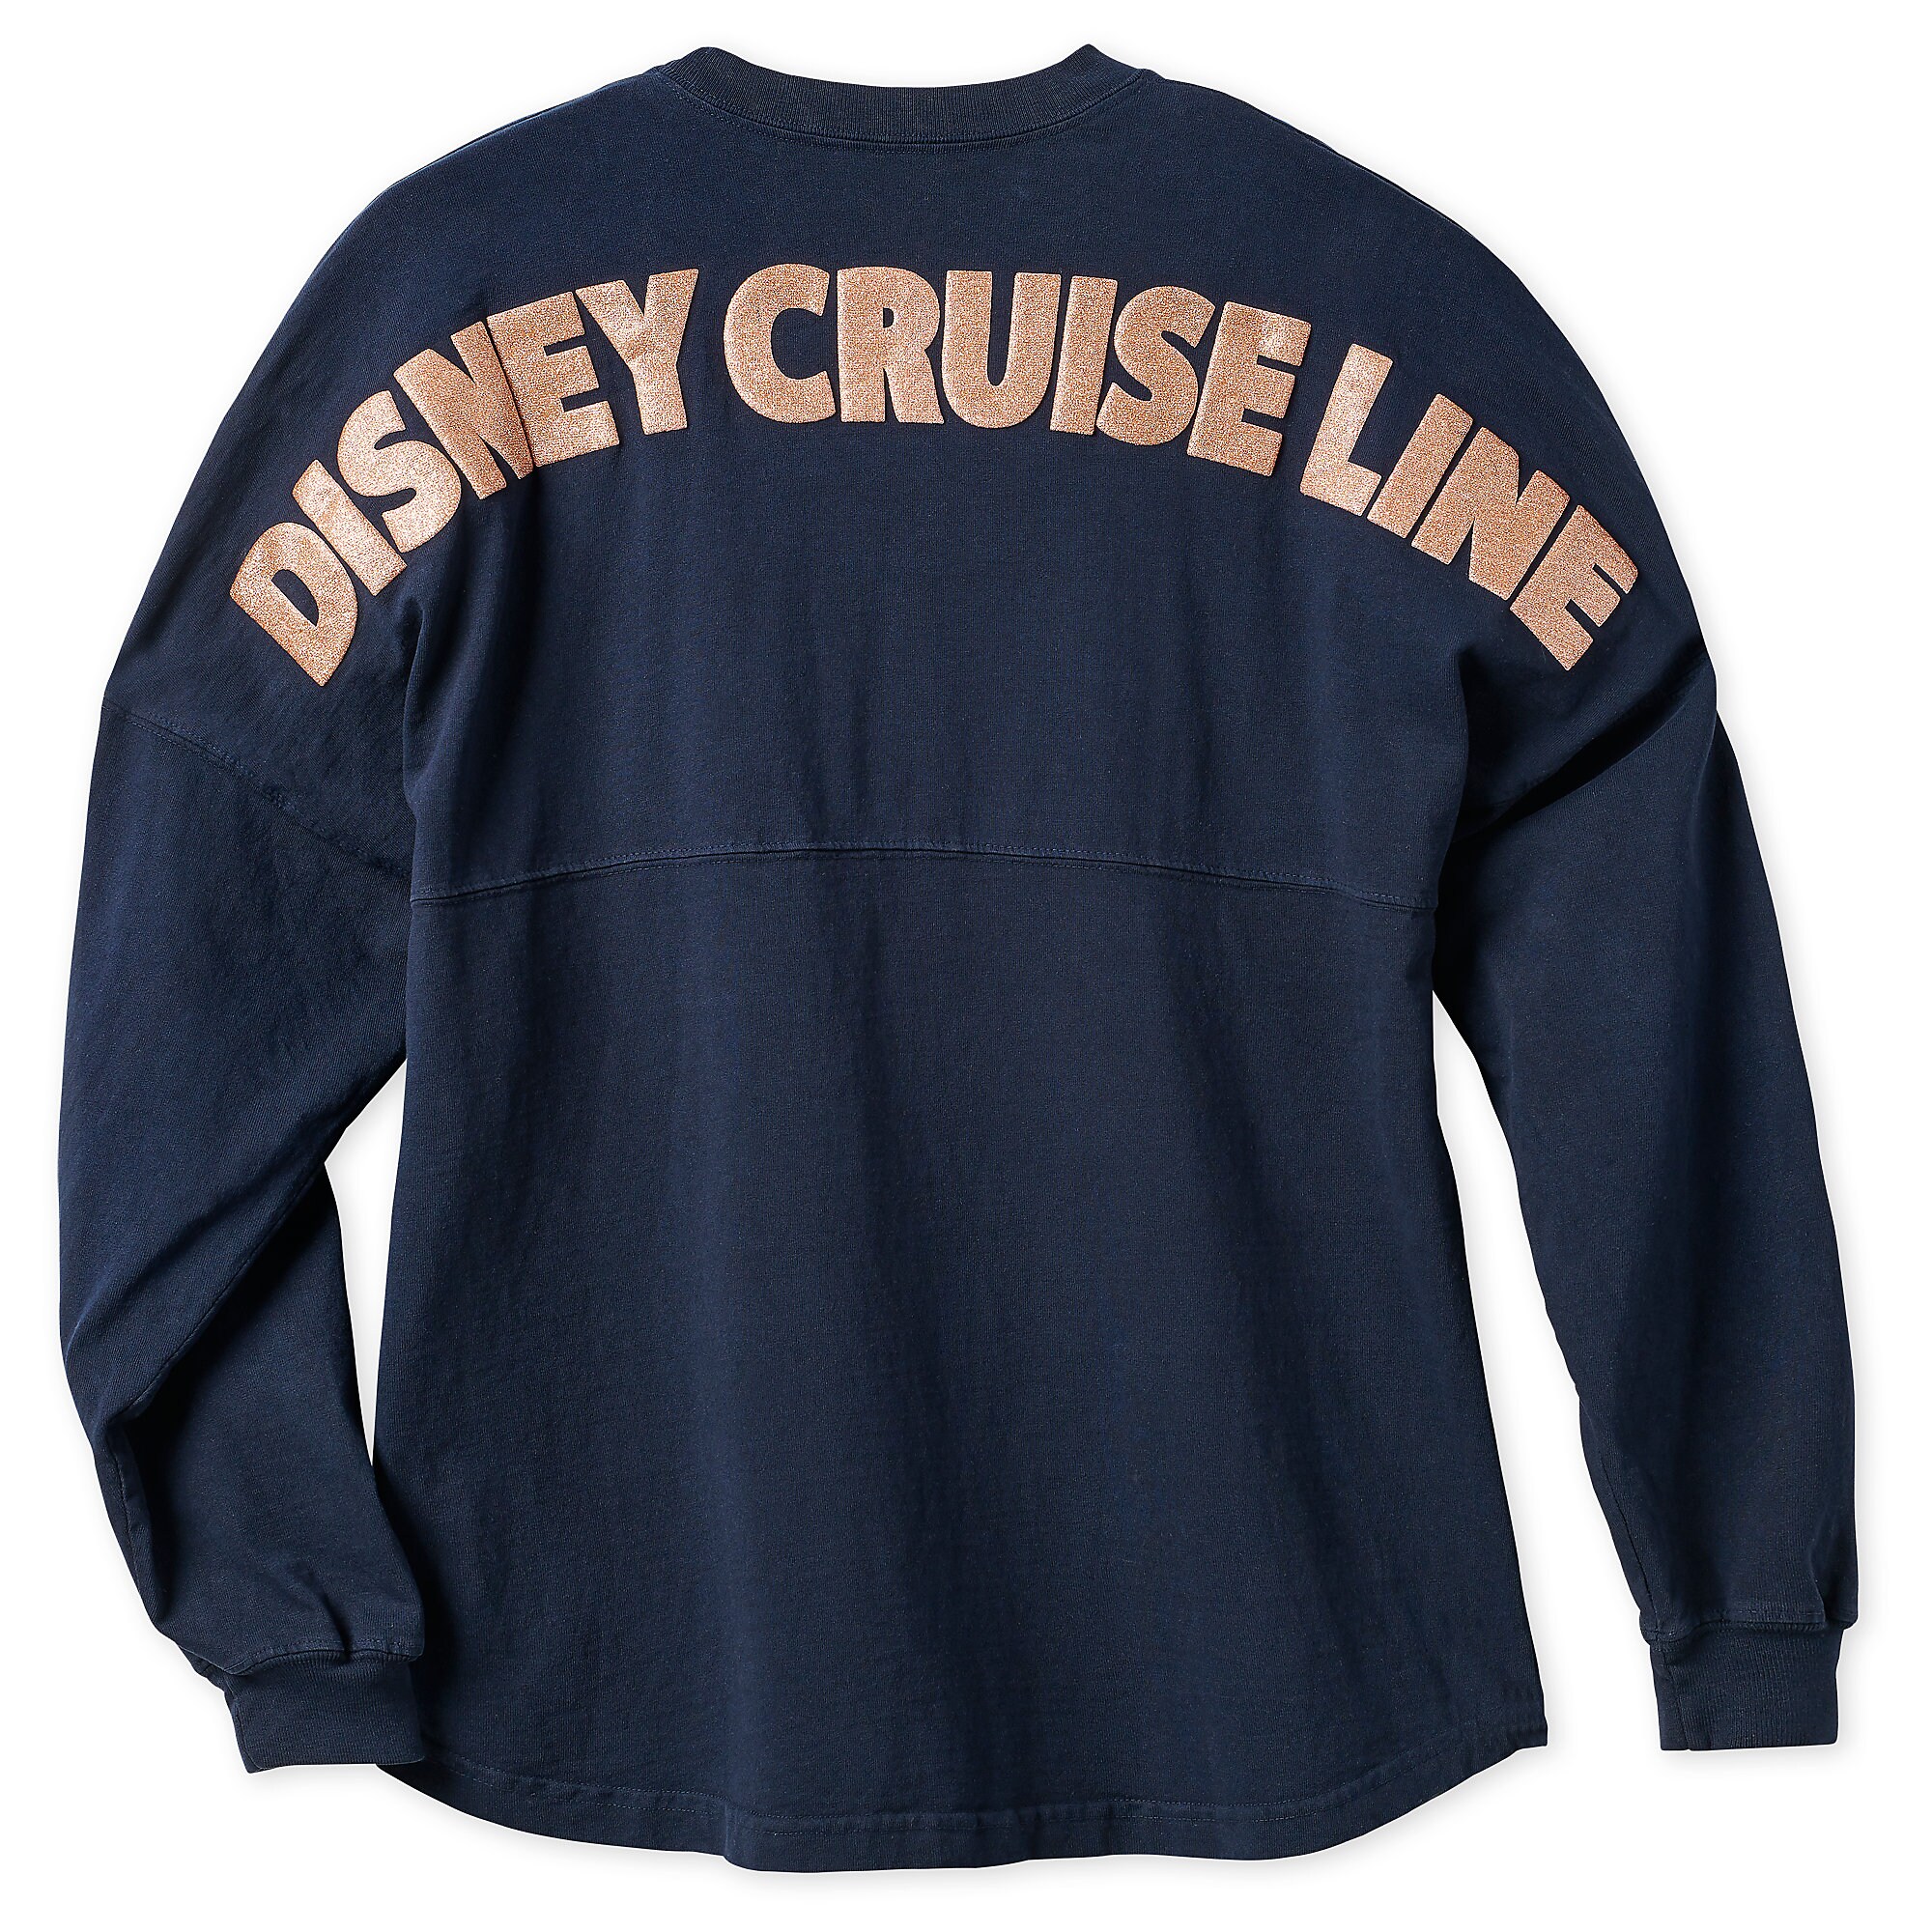 Disney Cruise Line Spirit Jersey for Adults - Indigo